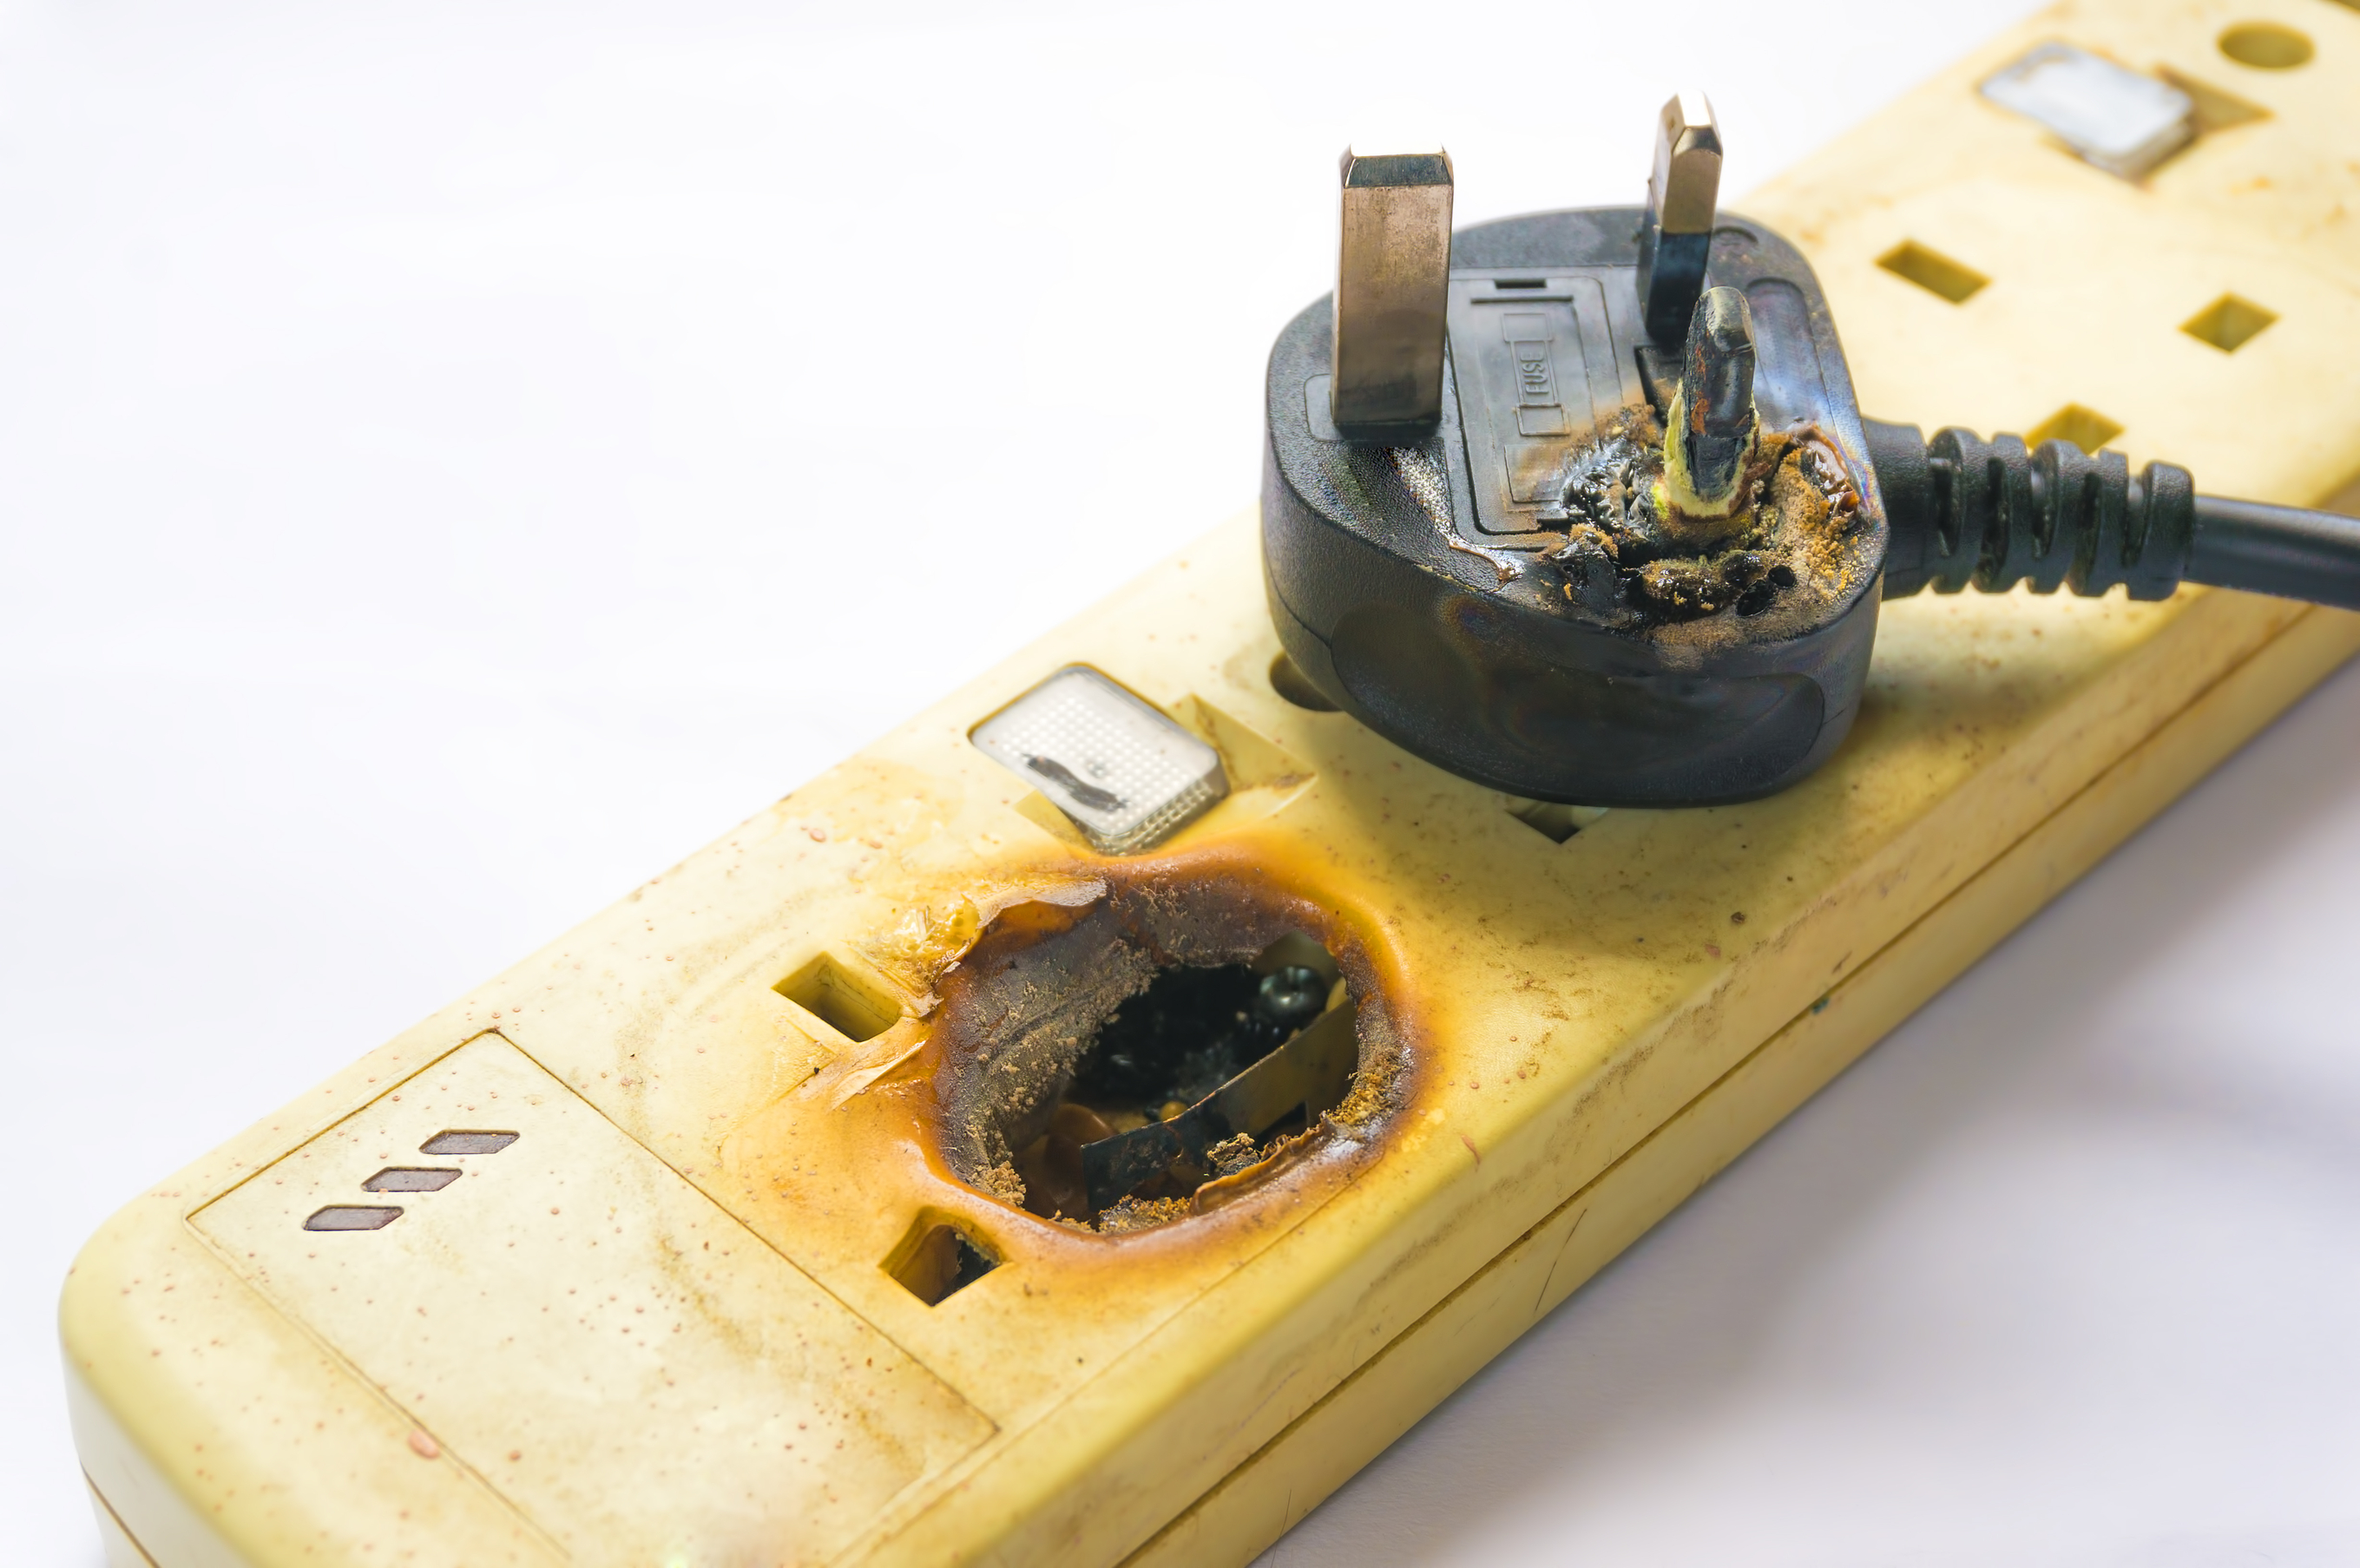 electrical testing of appliances in rental properties